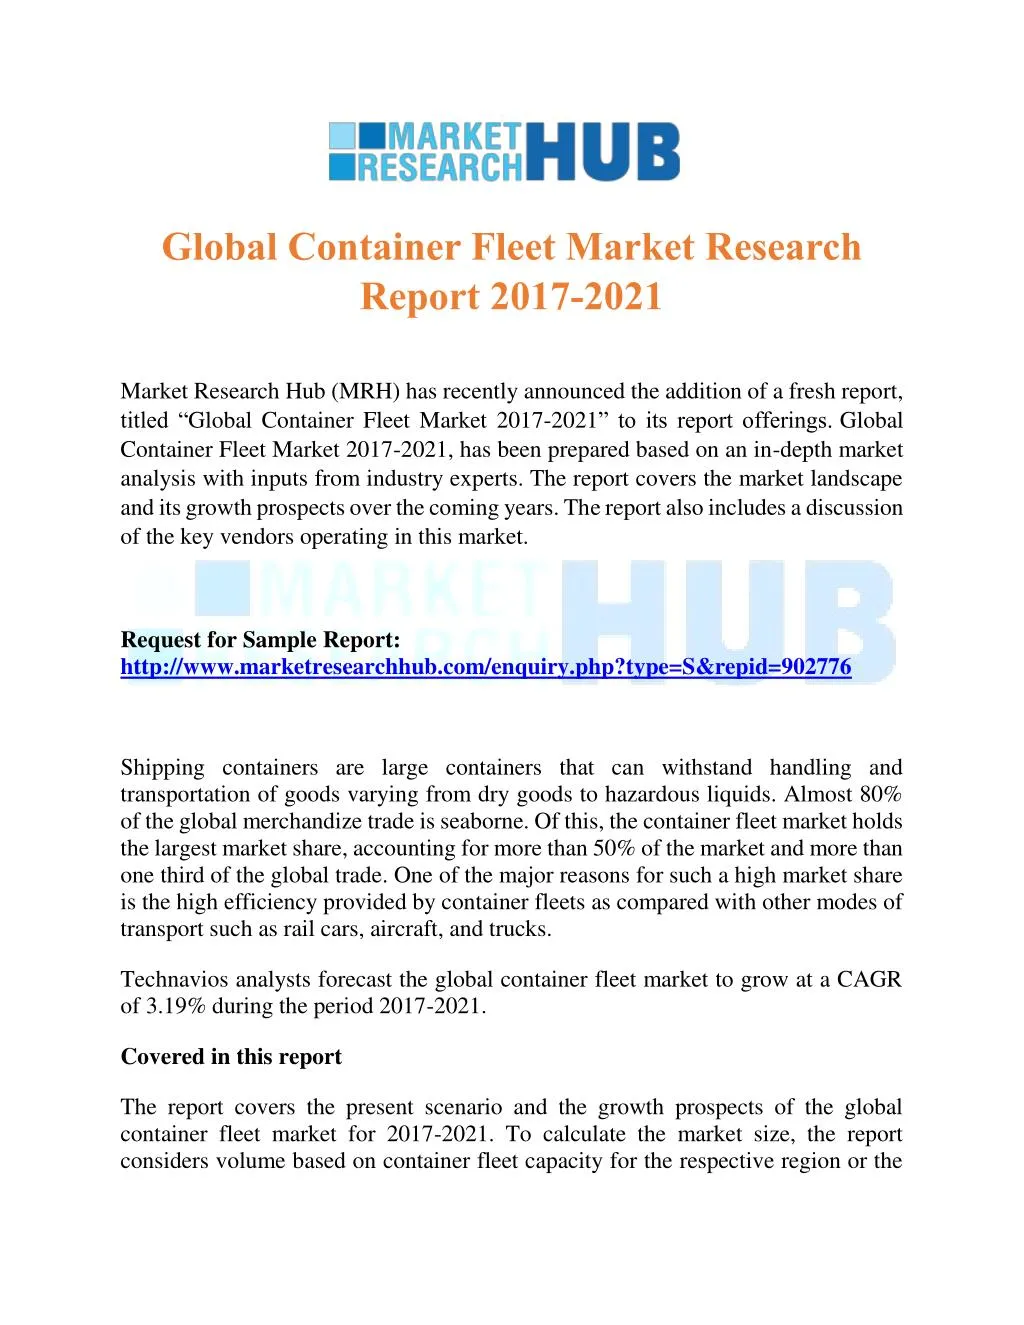 global container fleet market research report